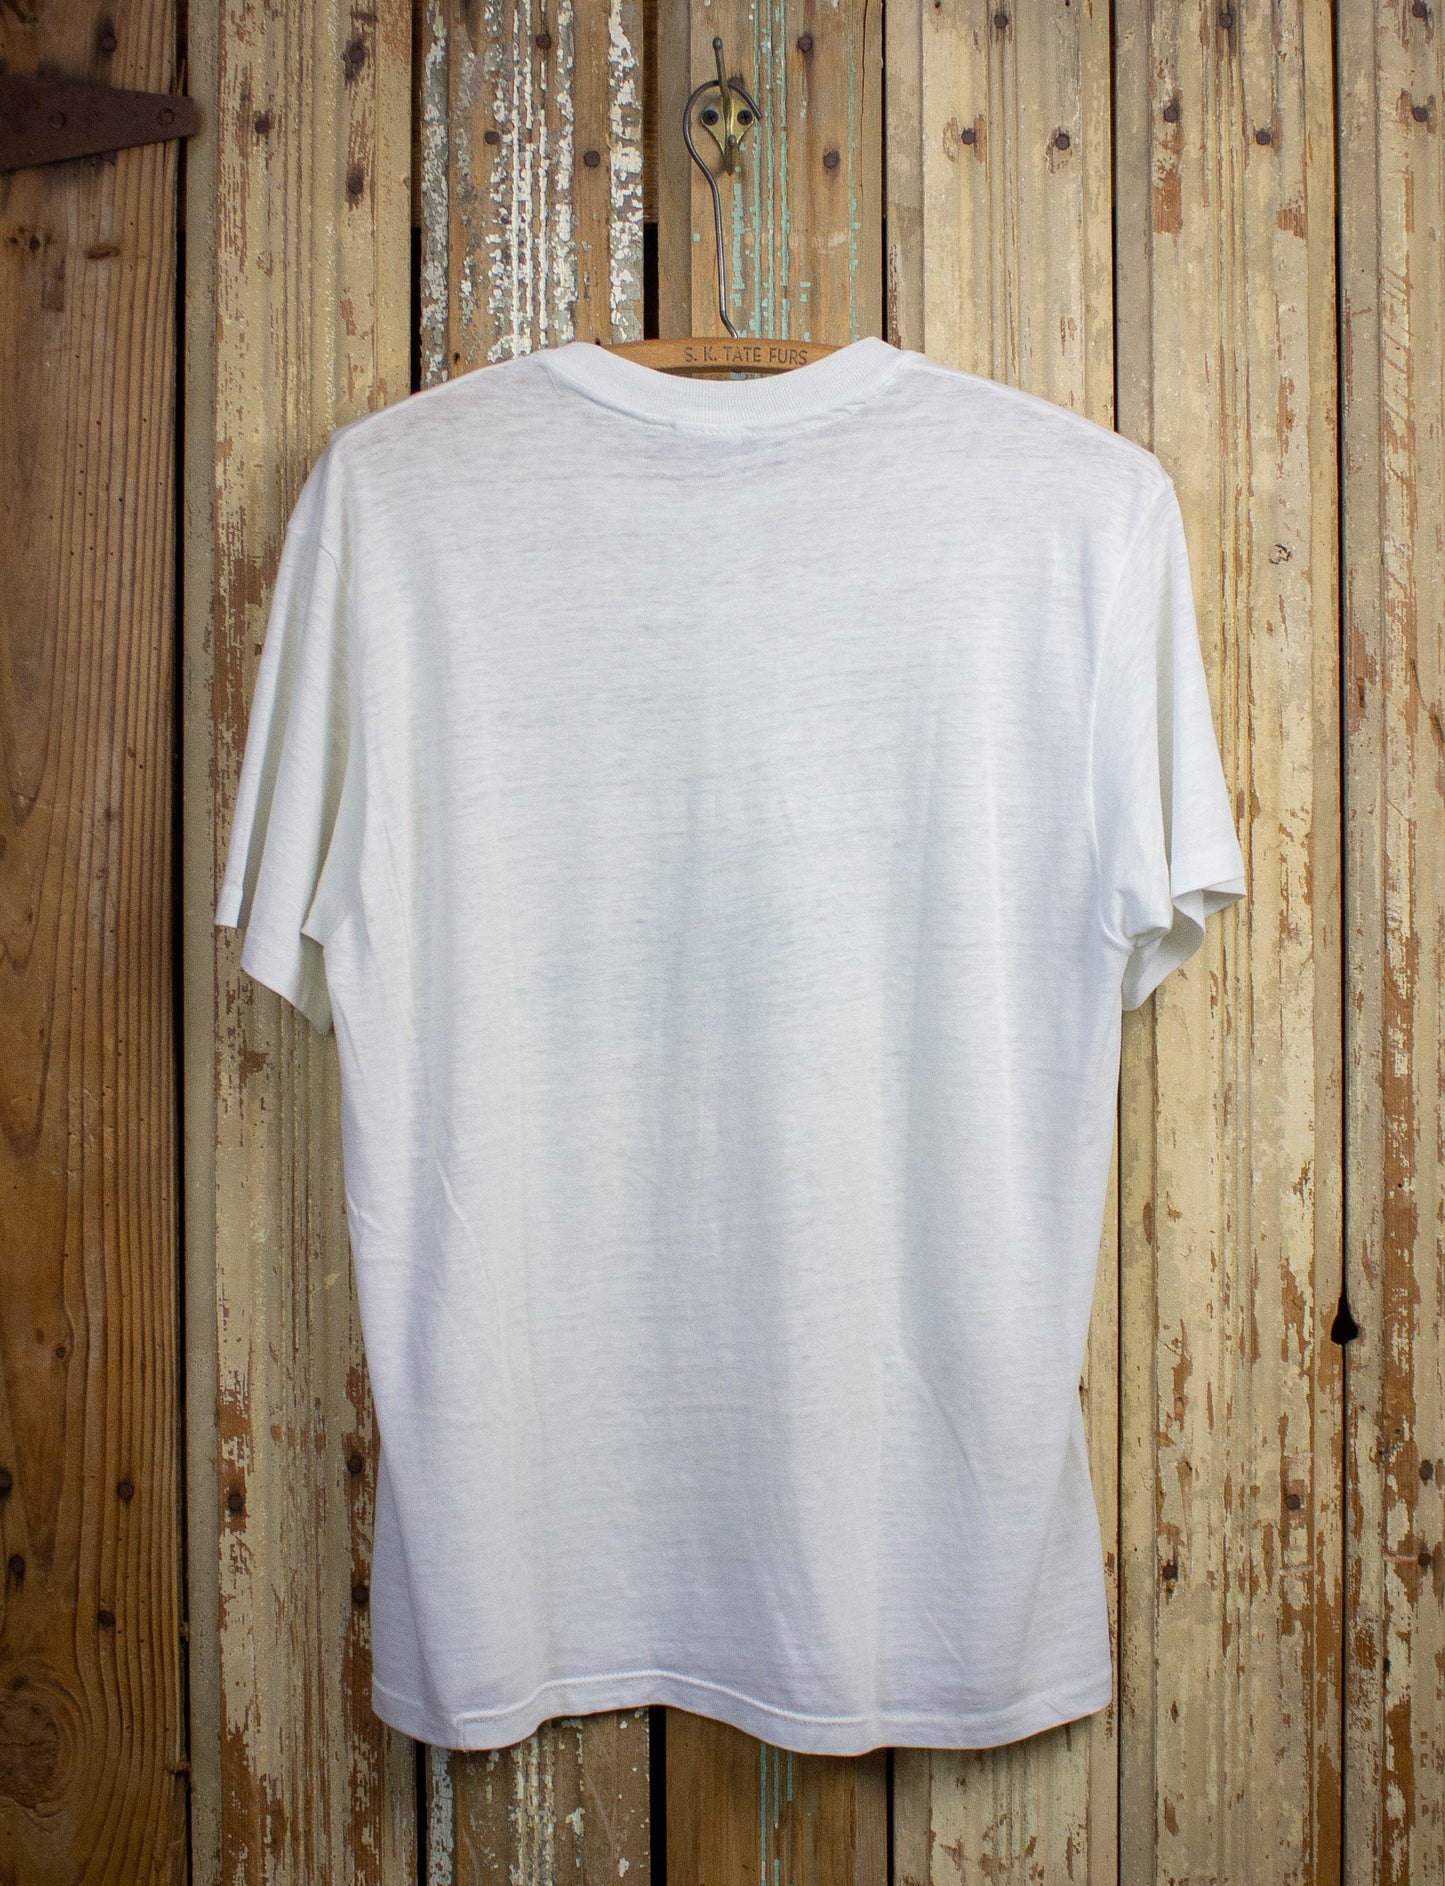 Vintage Smiths Charming Man Concert T Shirt 80s White Large